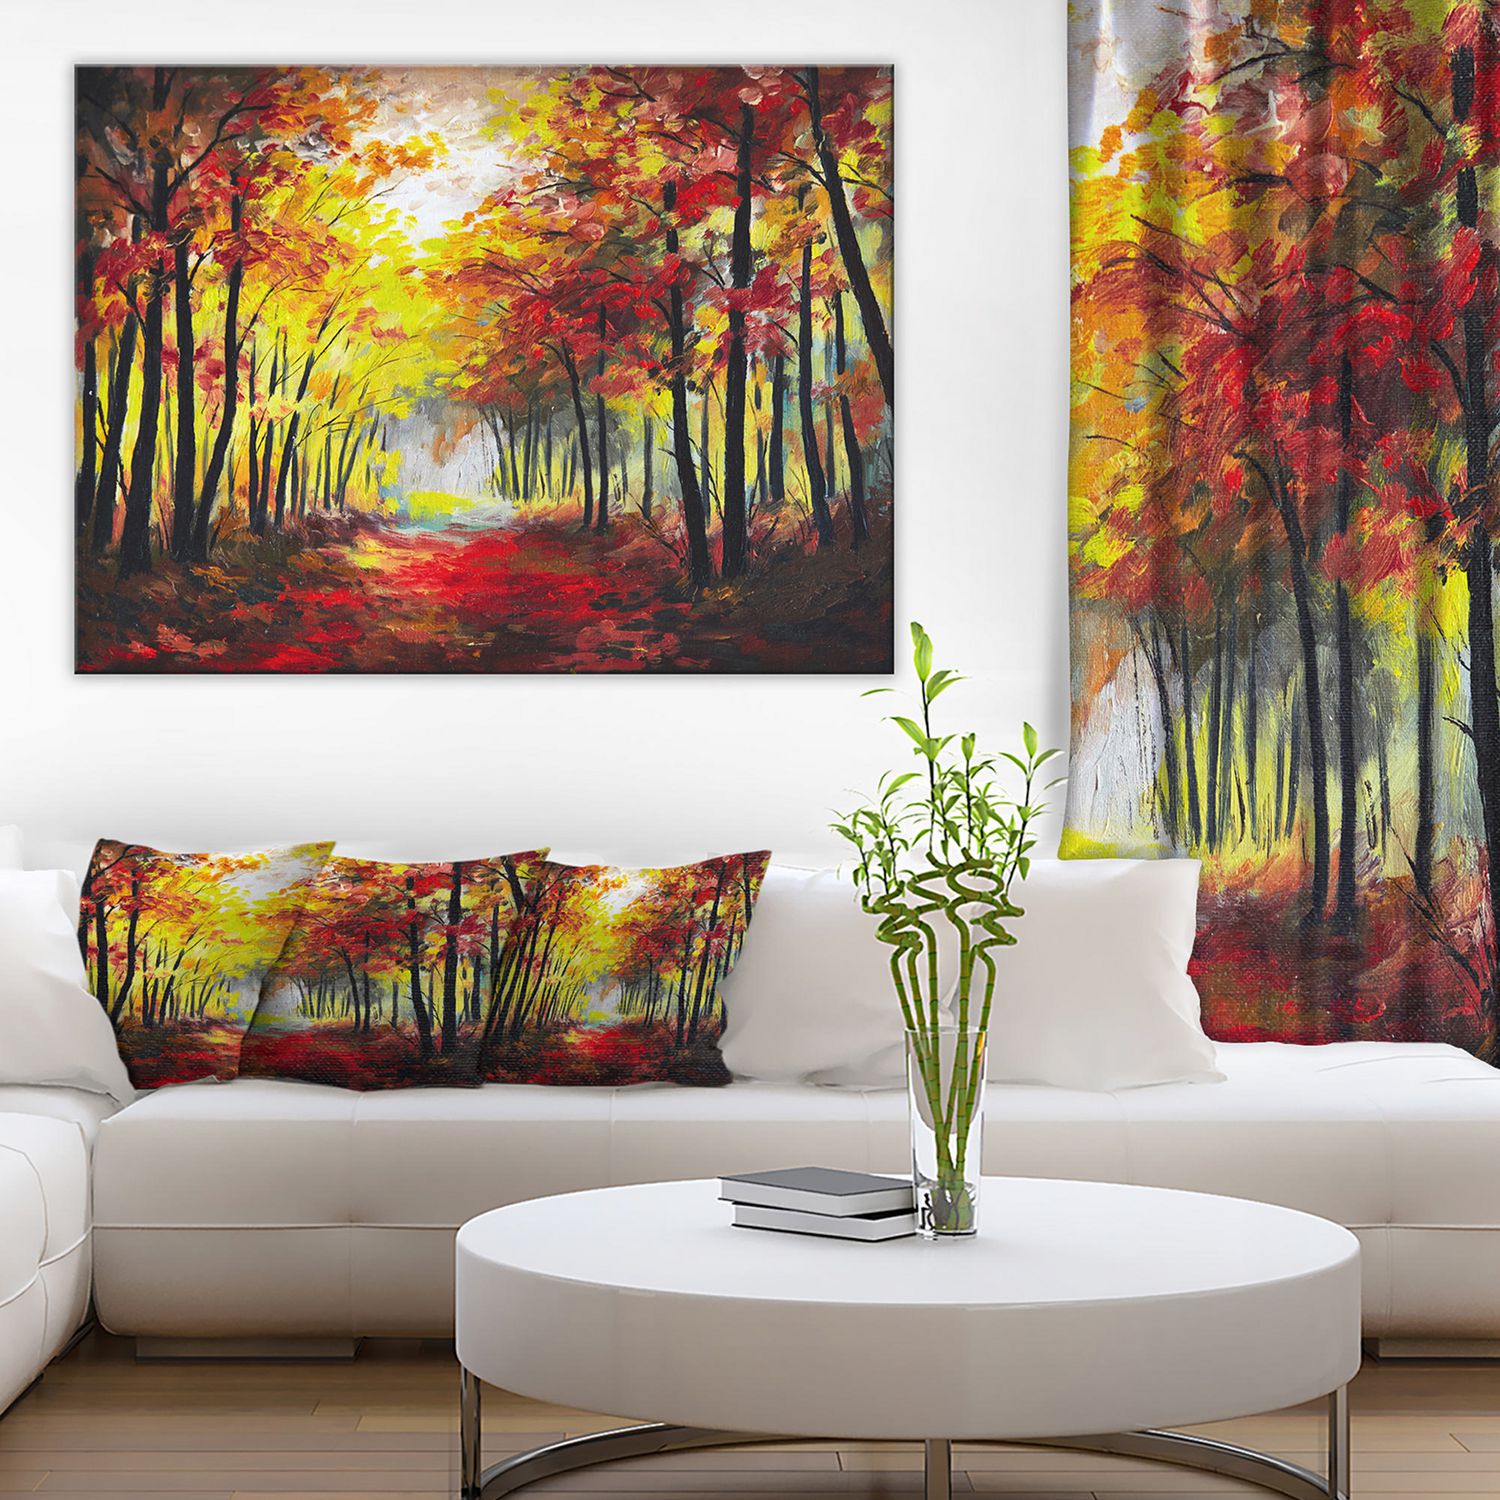 Design Art Walk through Autumn Forest Canvas Print | Walmart Canada